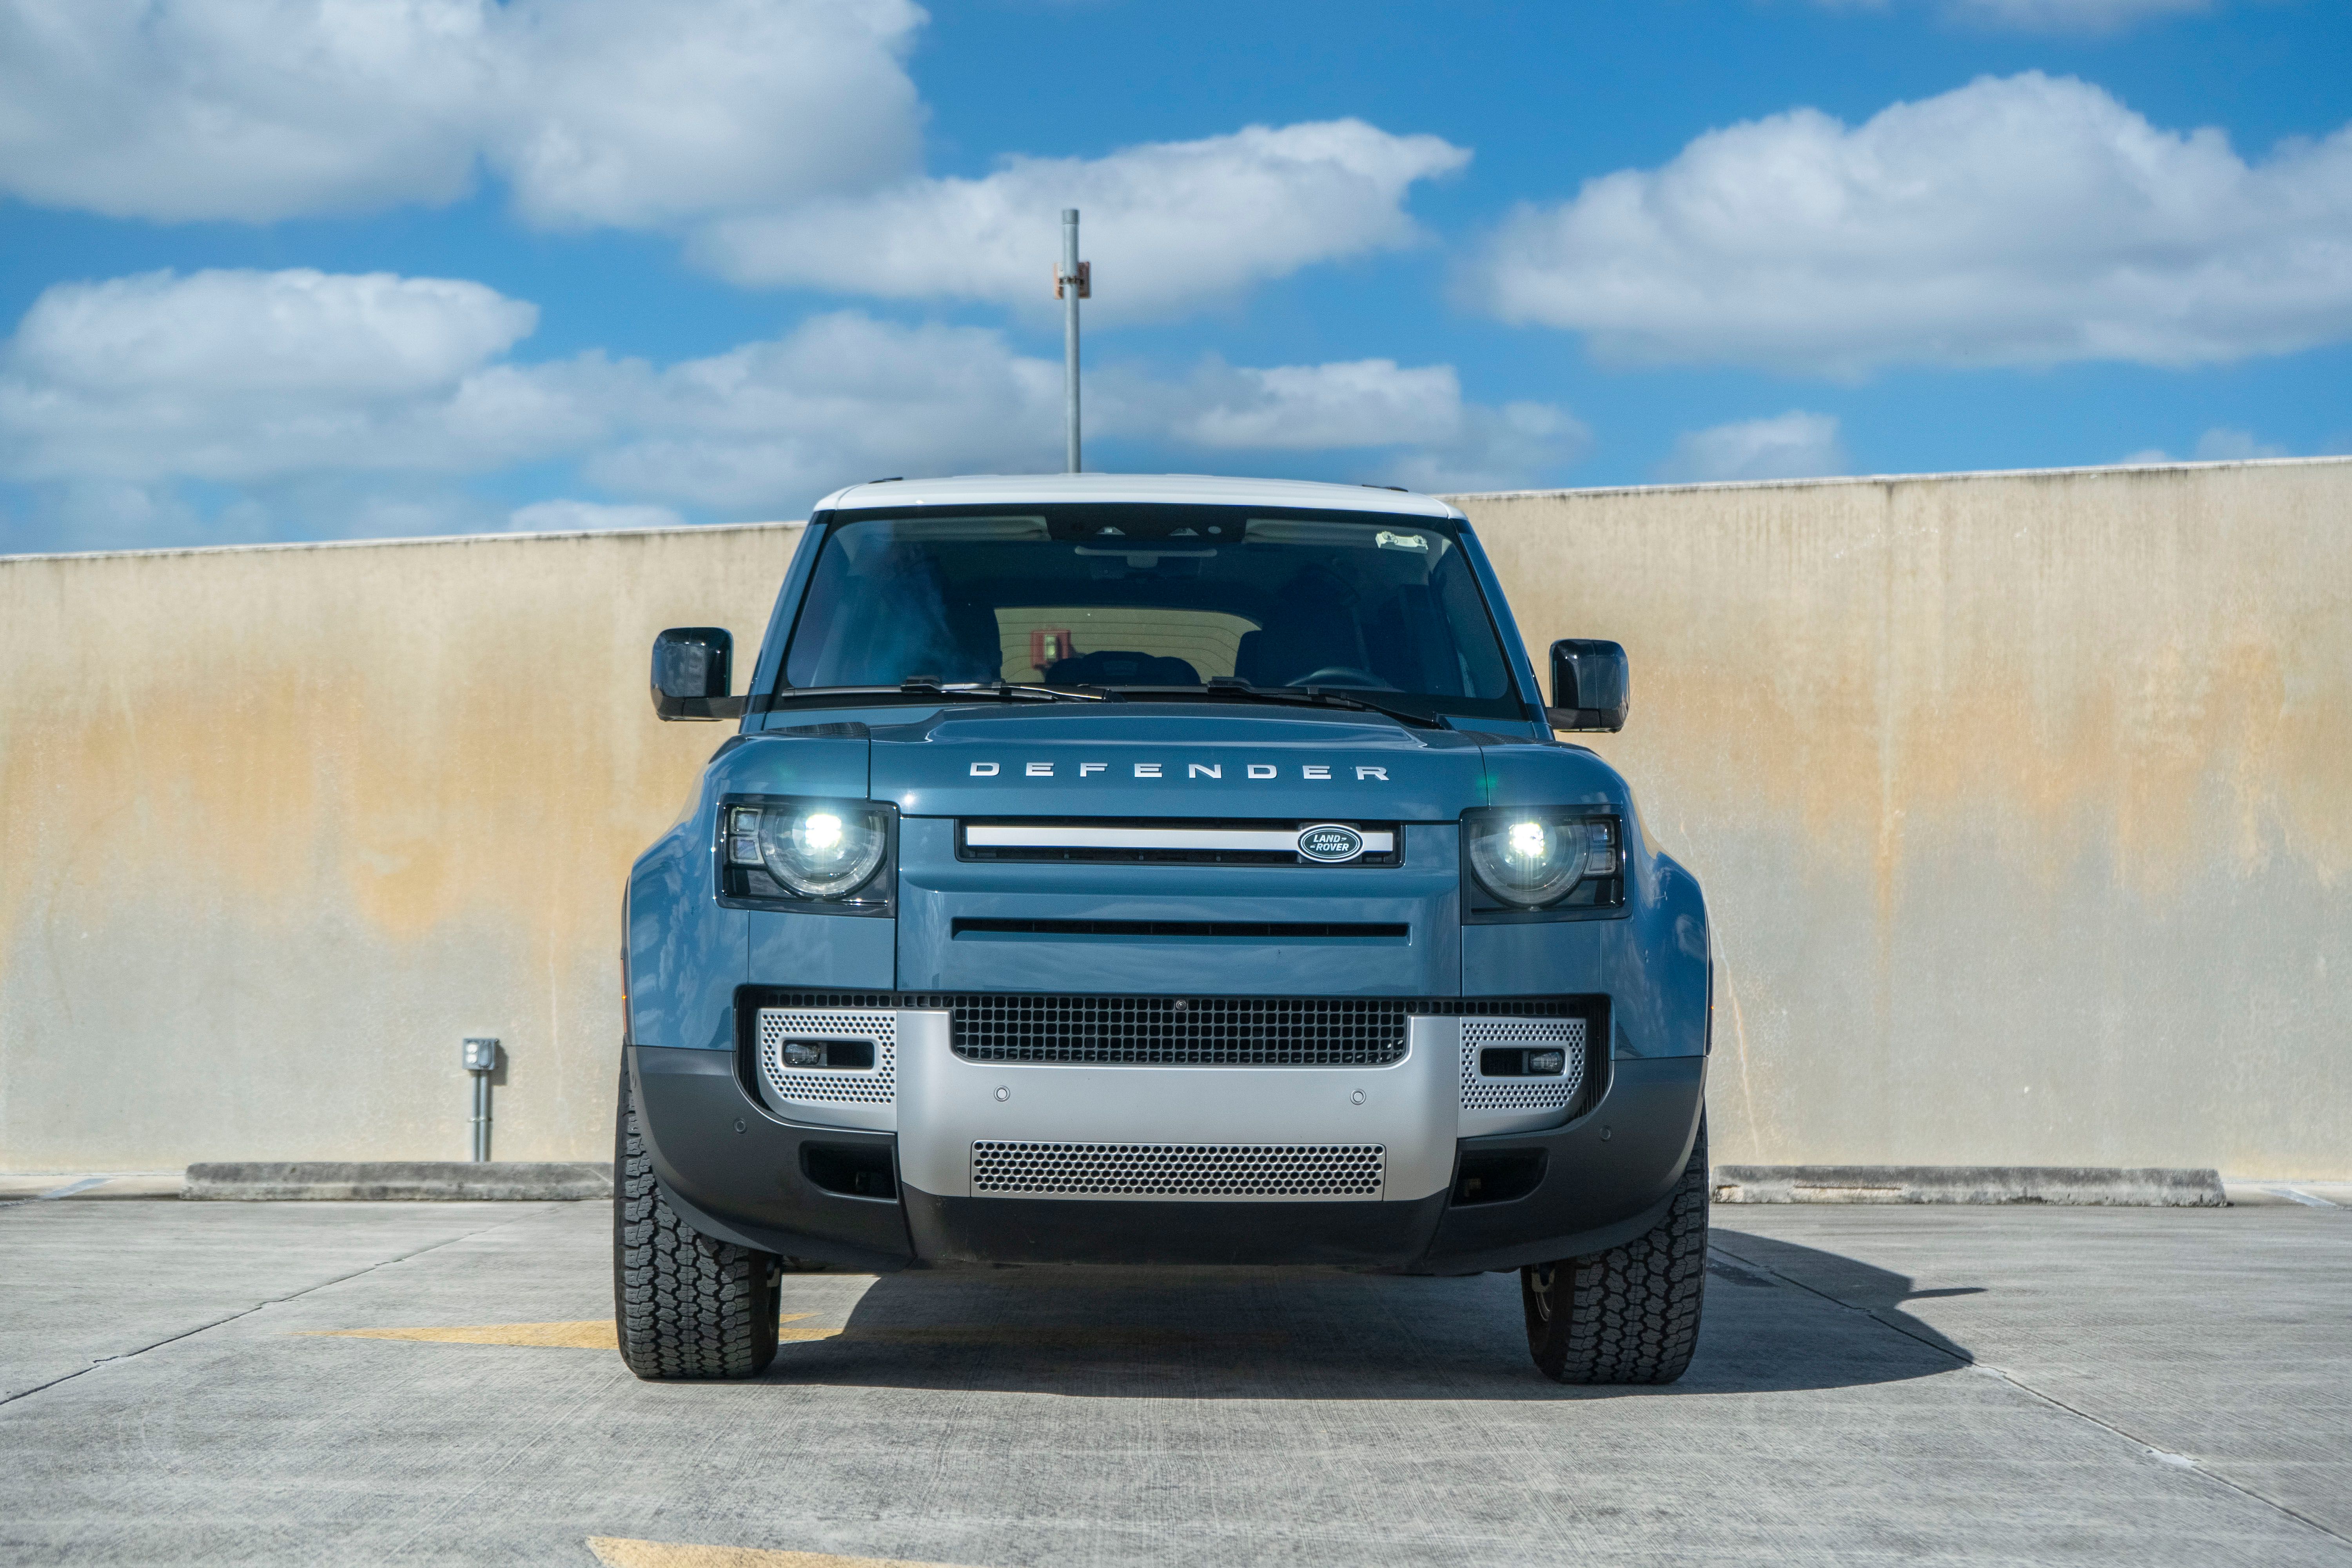 2020 Land Rover Defender - Driven